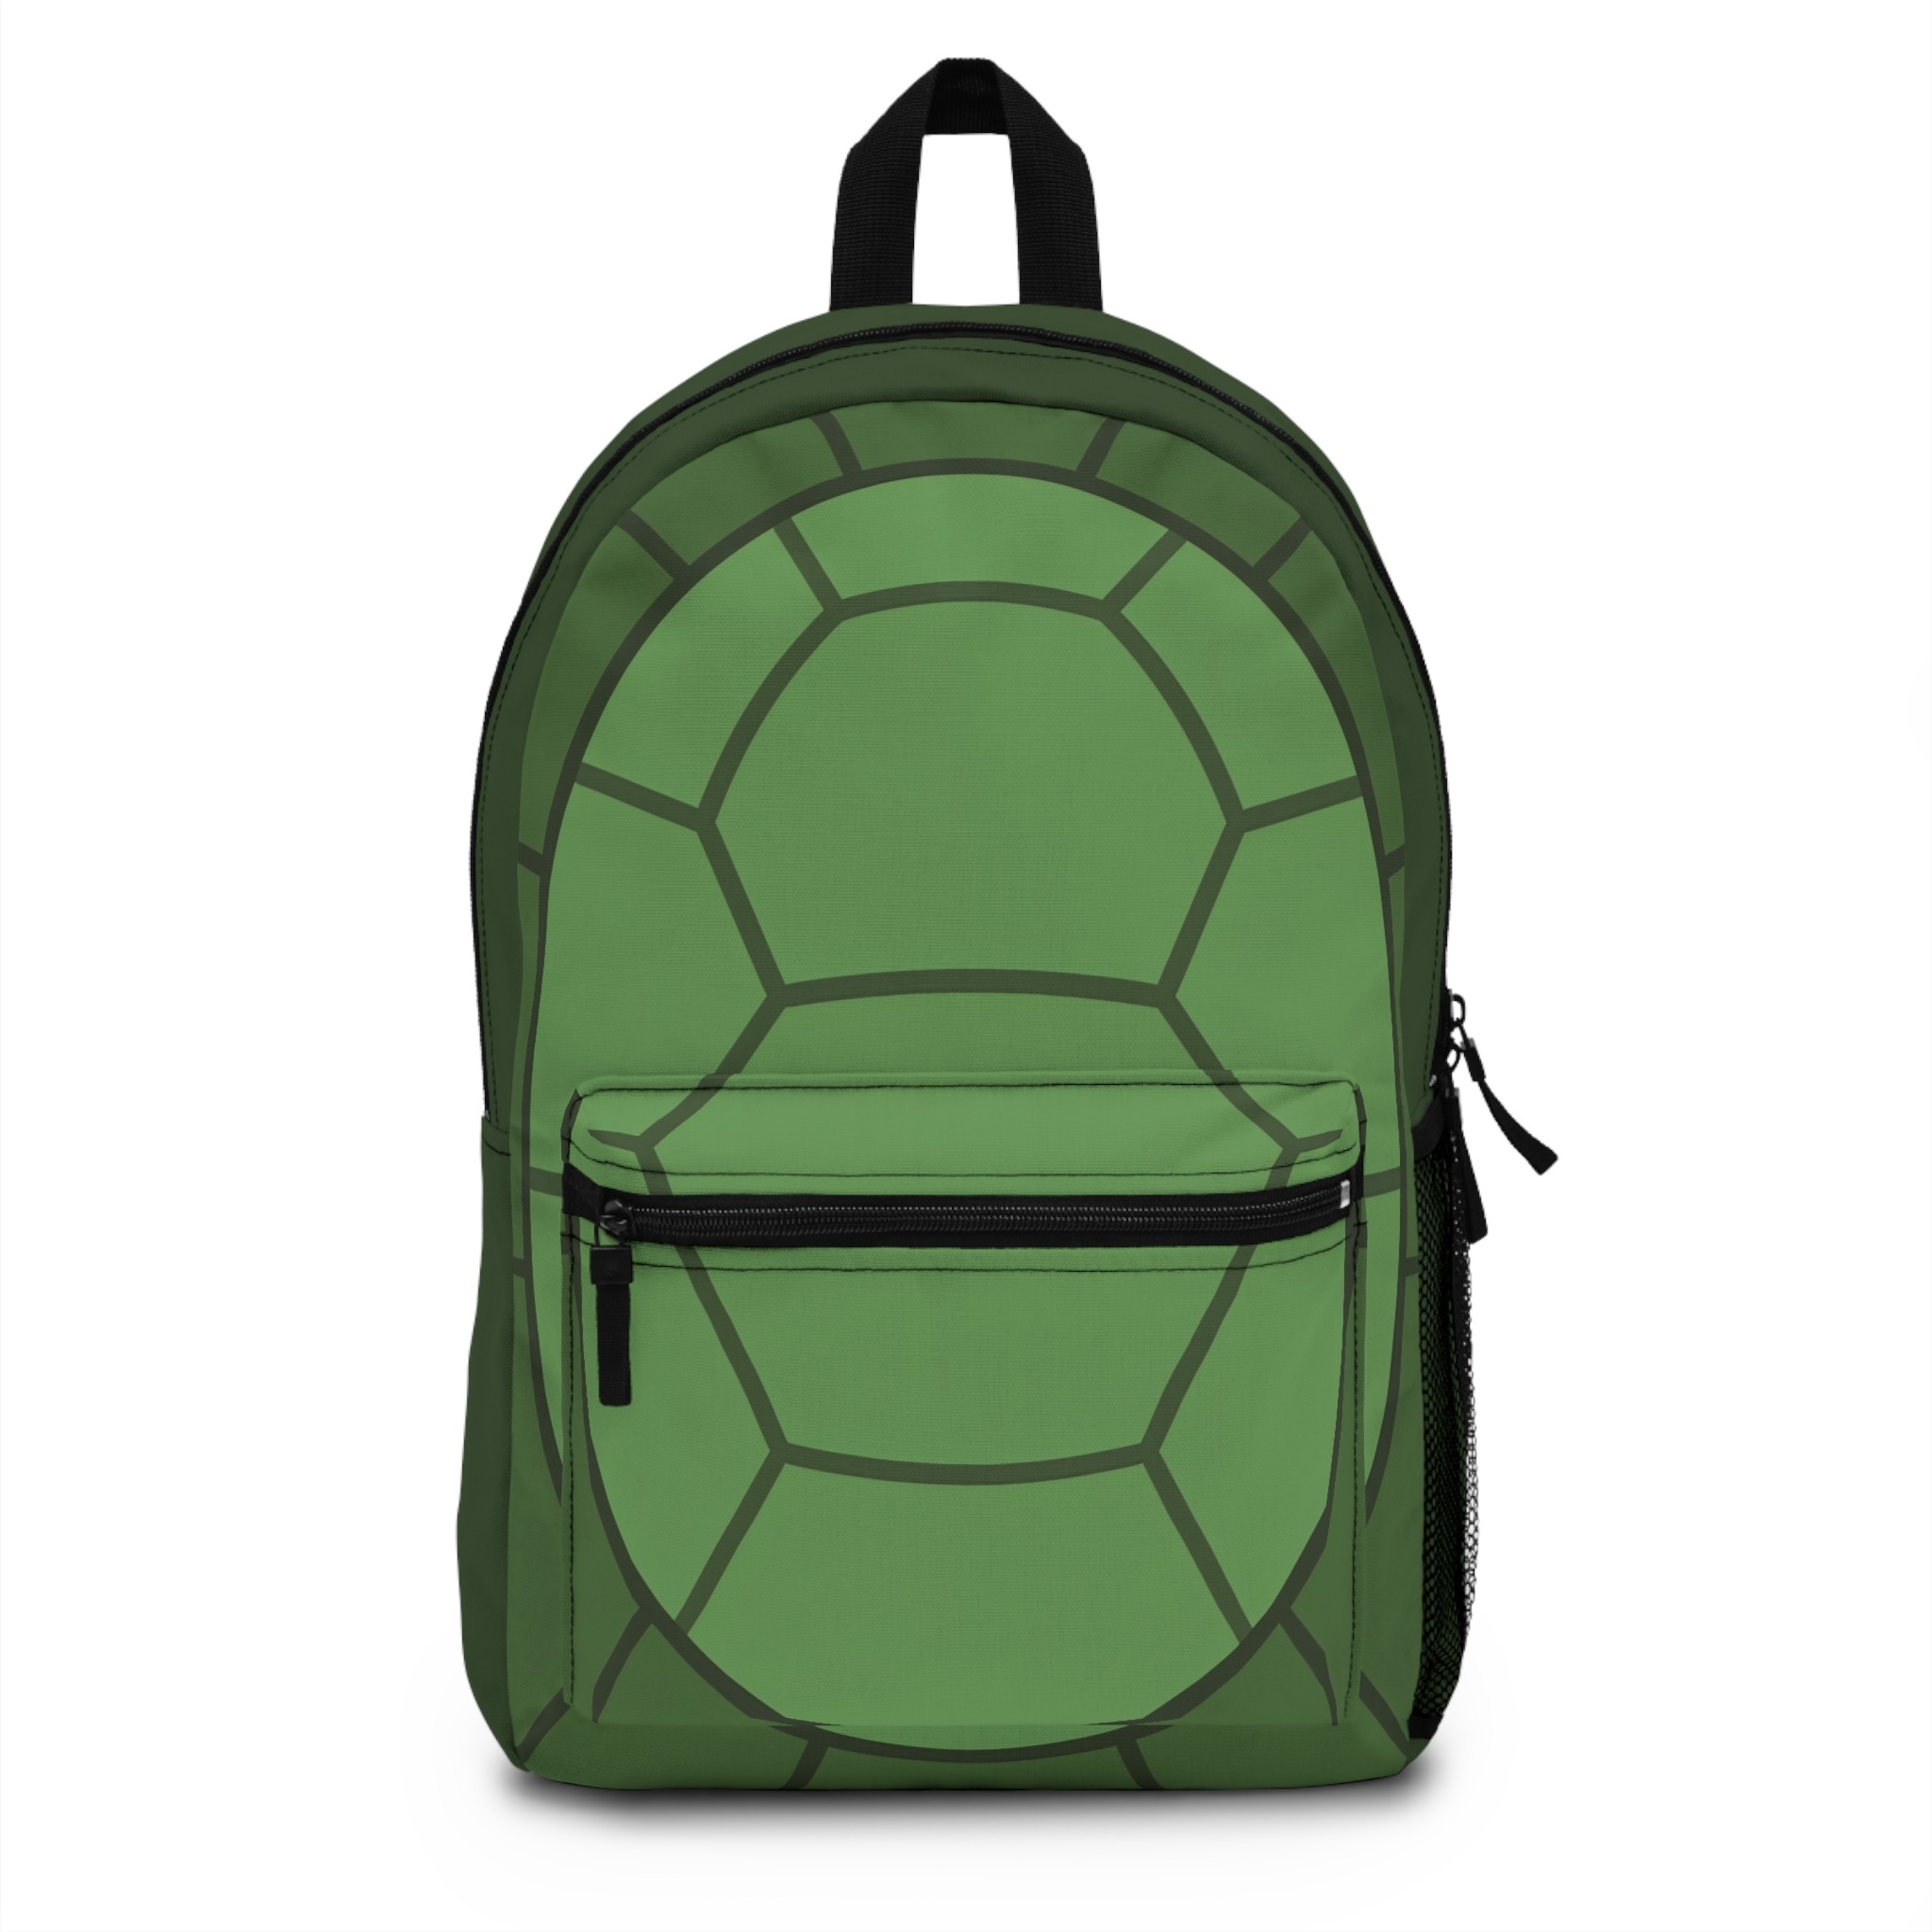 Turtle Shell Backpack - Turtle Shell bookbag - Turtle Shell merch - Turtle Shell apparel